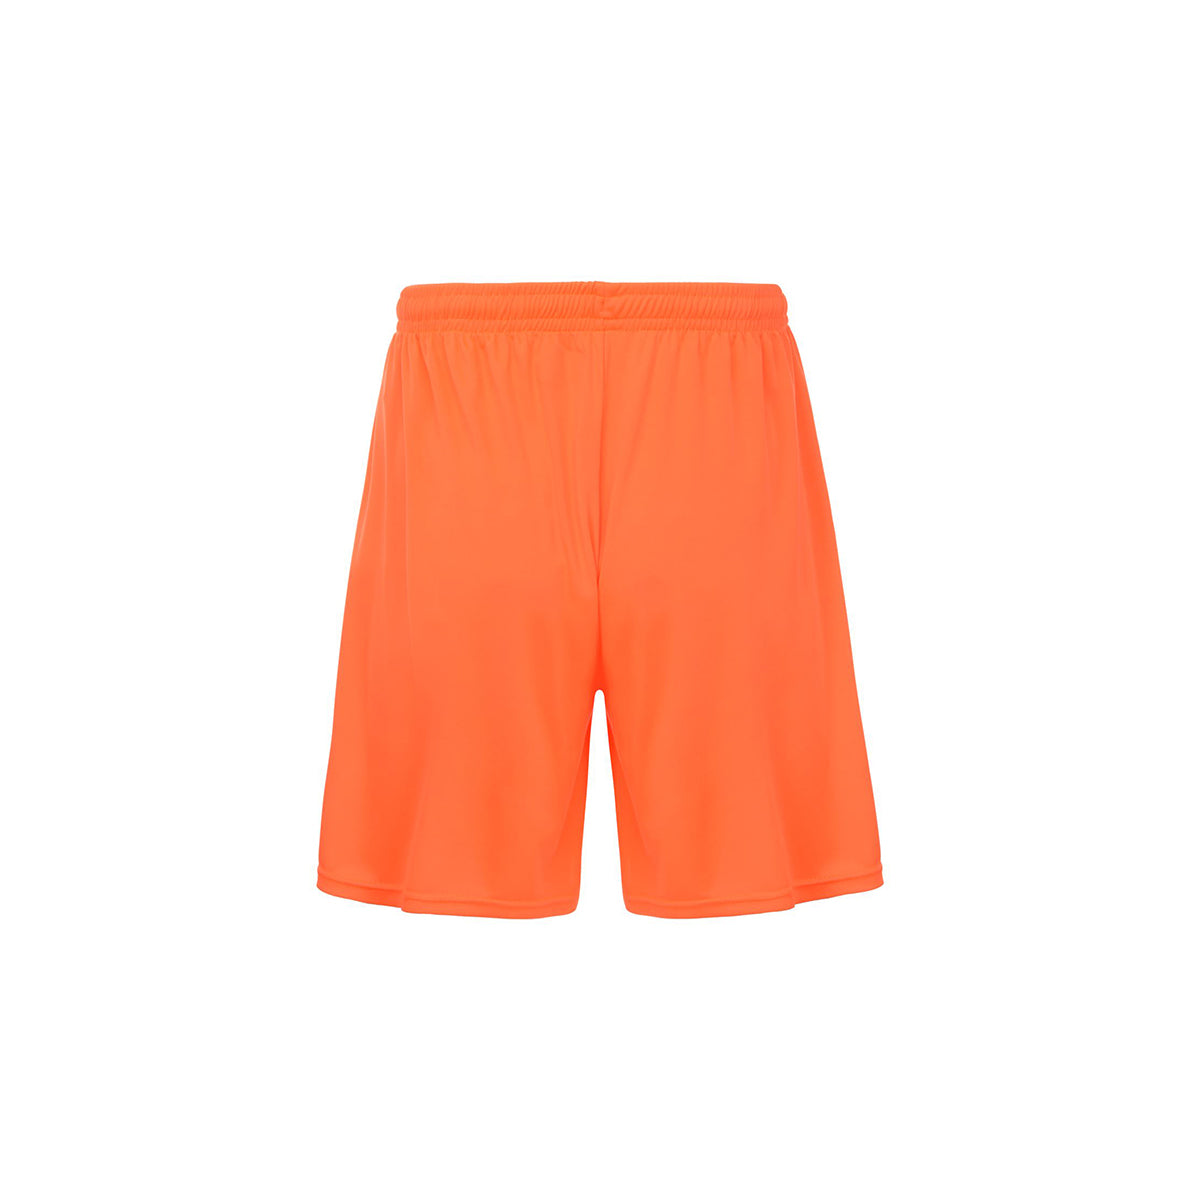 Pantalones cortes Borgo Naranja Hombre - imagen 3